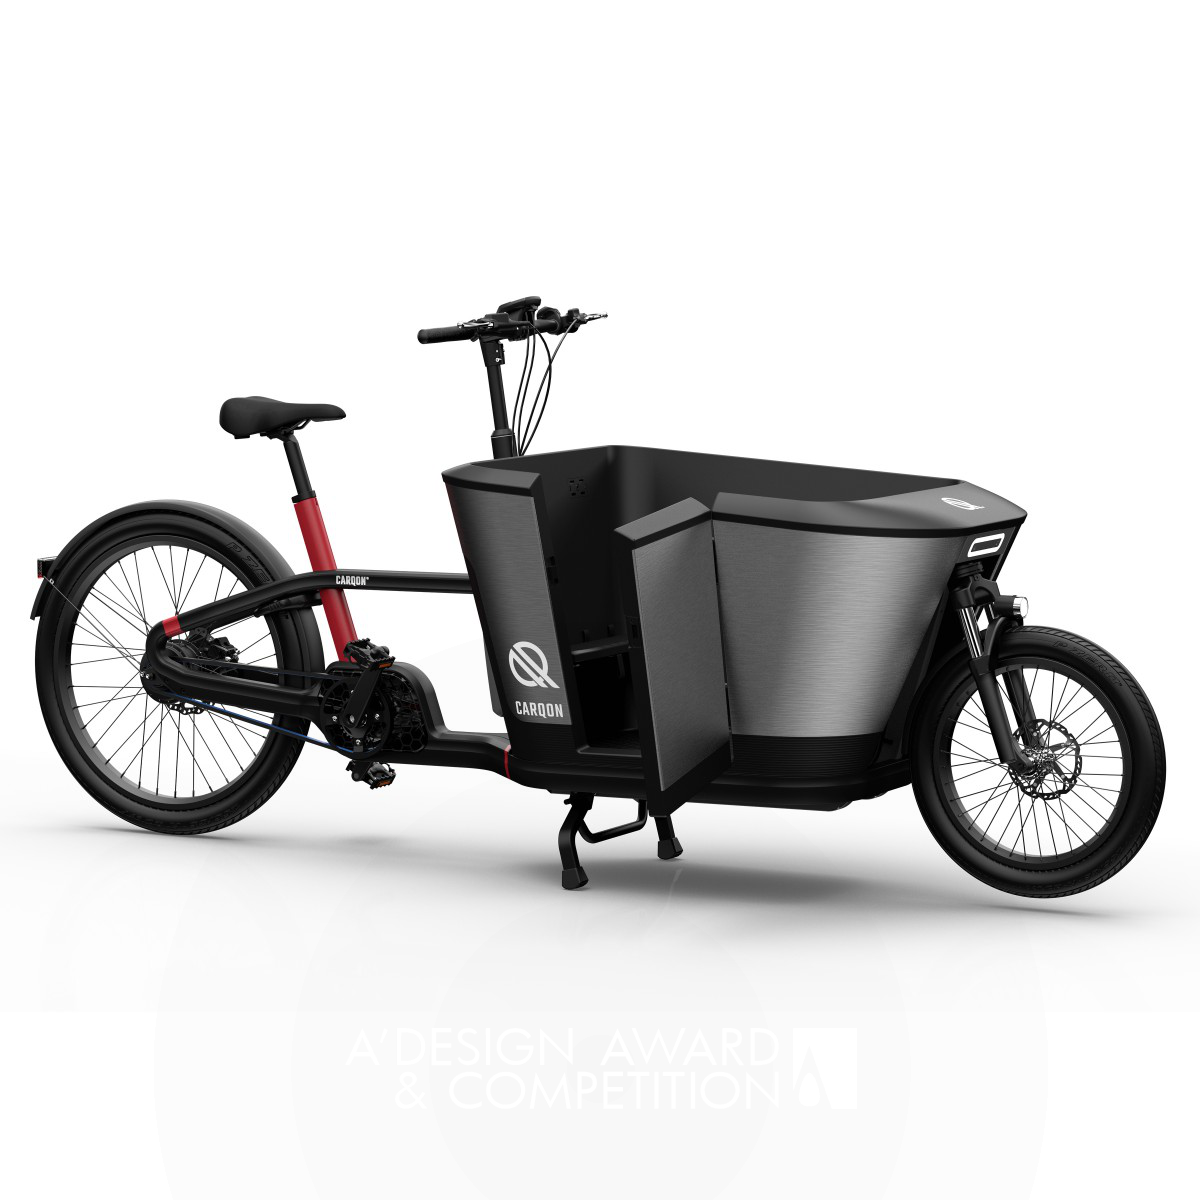 Carqon Electric Cargo Bike